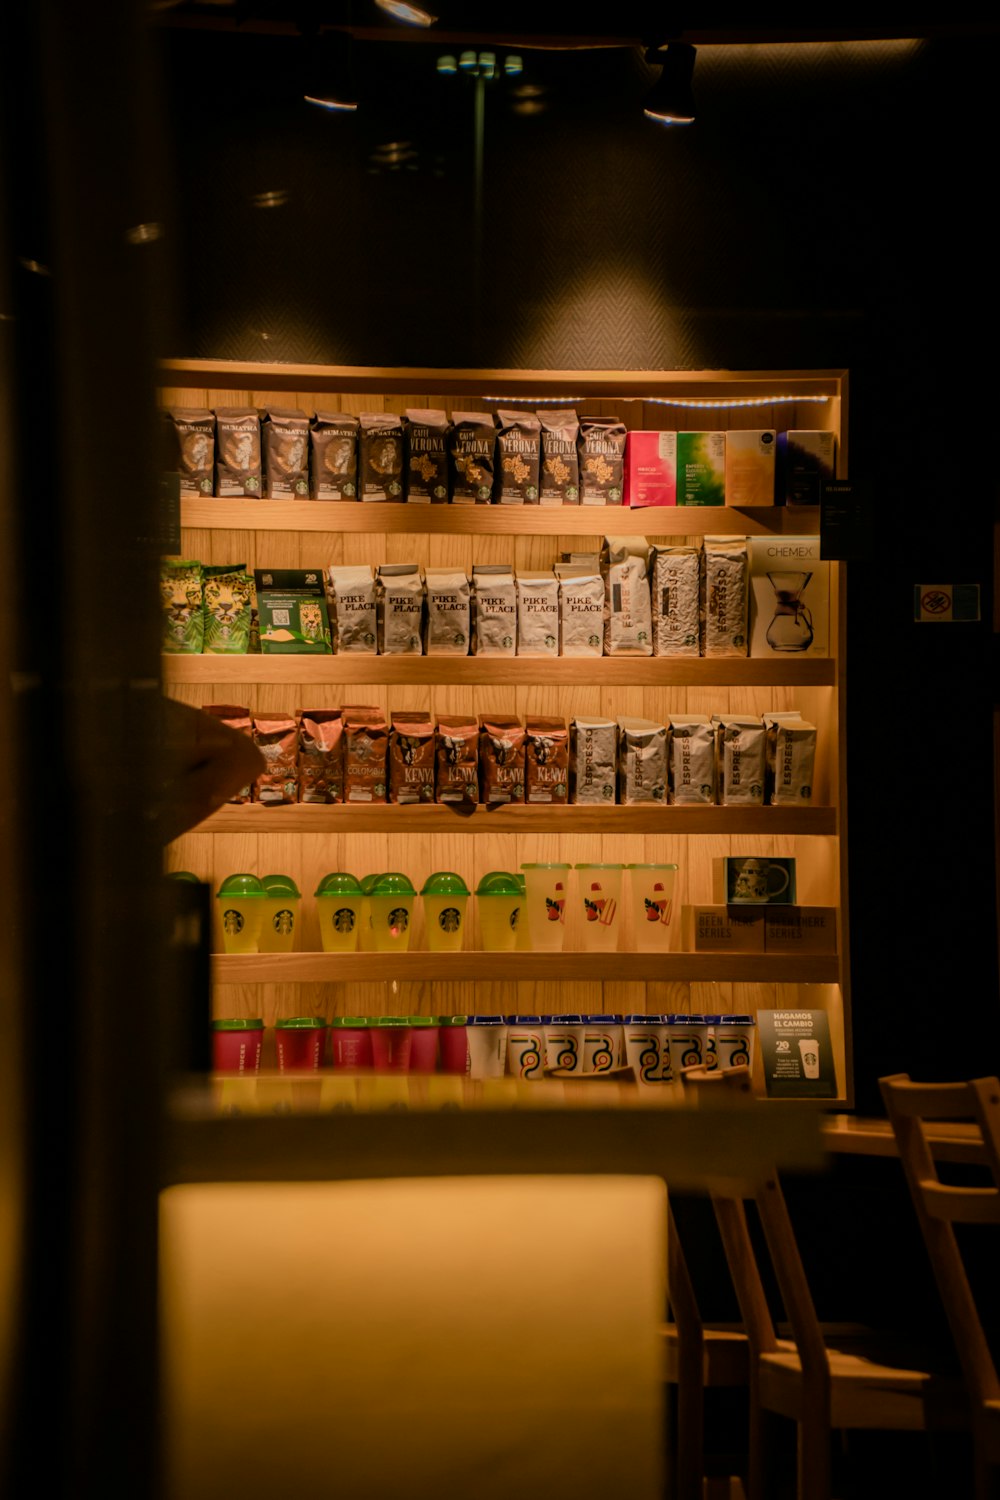 a shelf with many jars of food on it